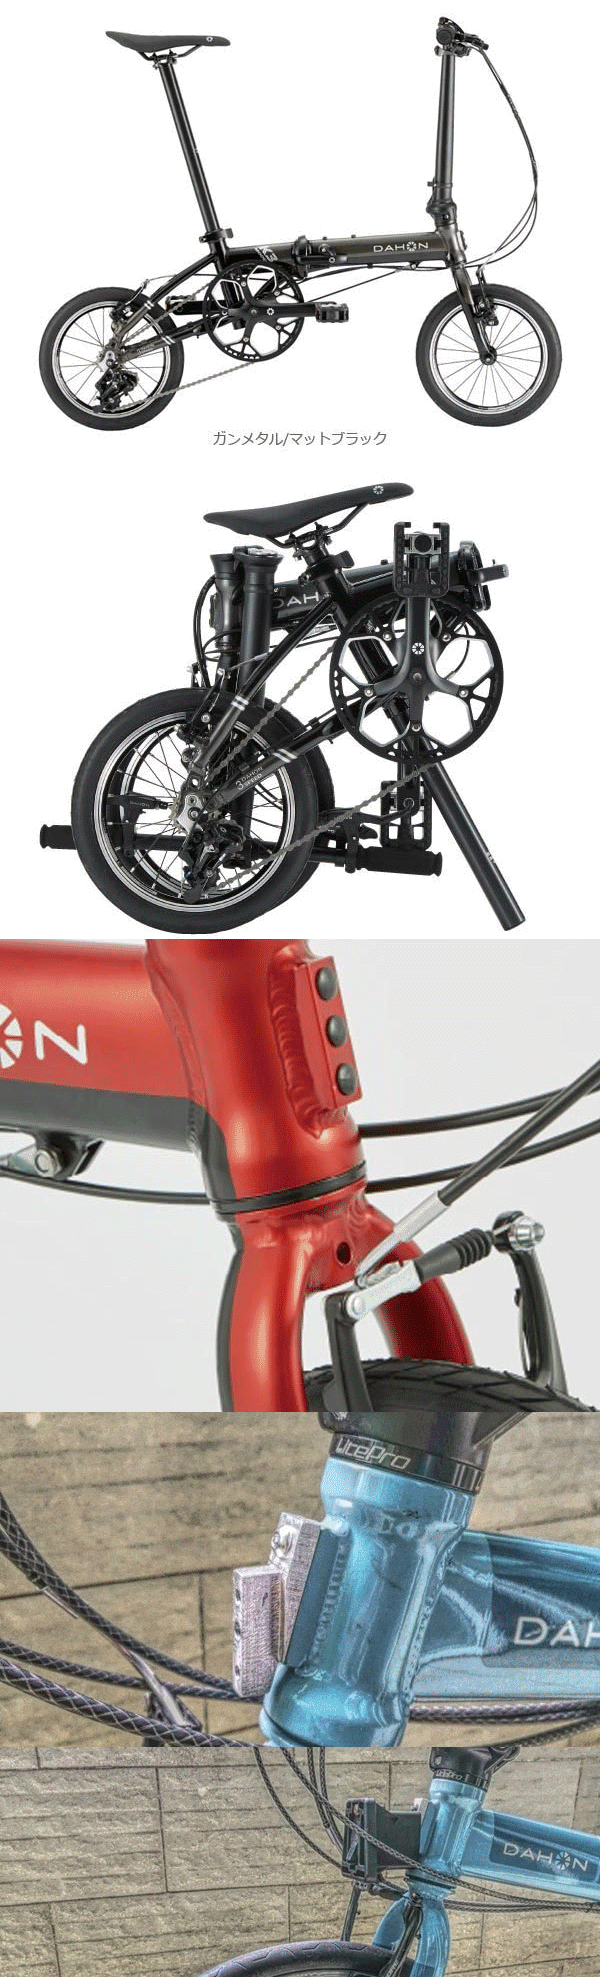 Manufacturer Tern Vs Dahon And Alternatives Bike Forums